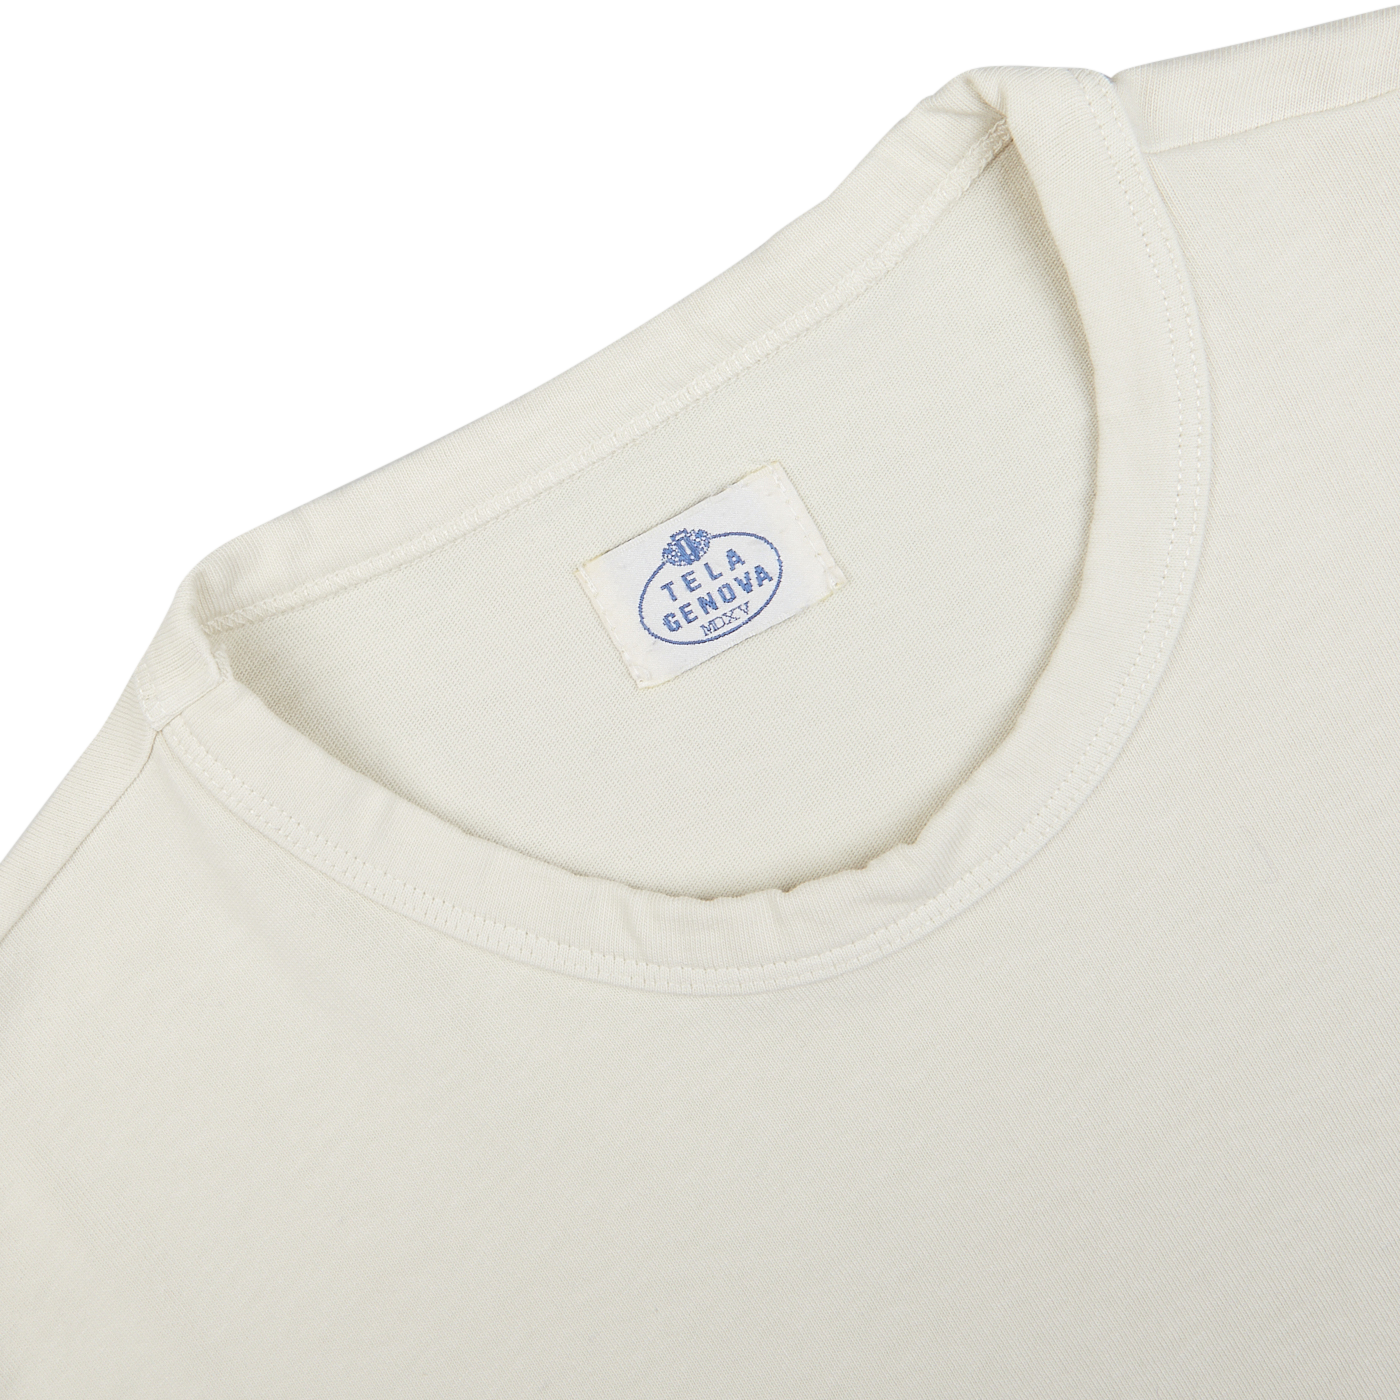 Close-up of a cream-colored Tela Genova Off-White Heavy Organic Cotton LS T-Shirt's neckline showing the Tela Genova brand label.